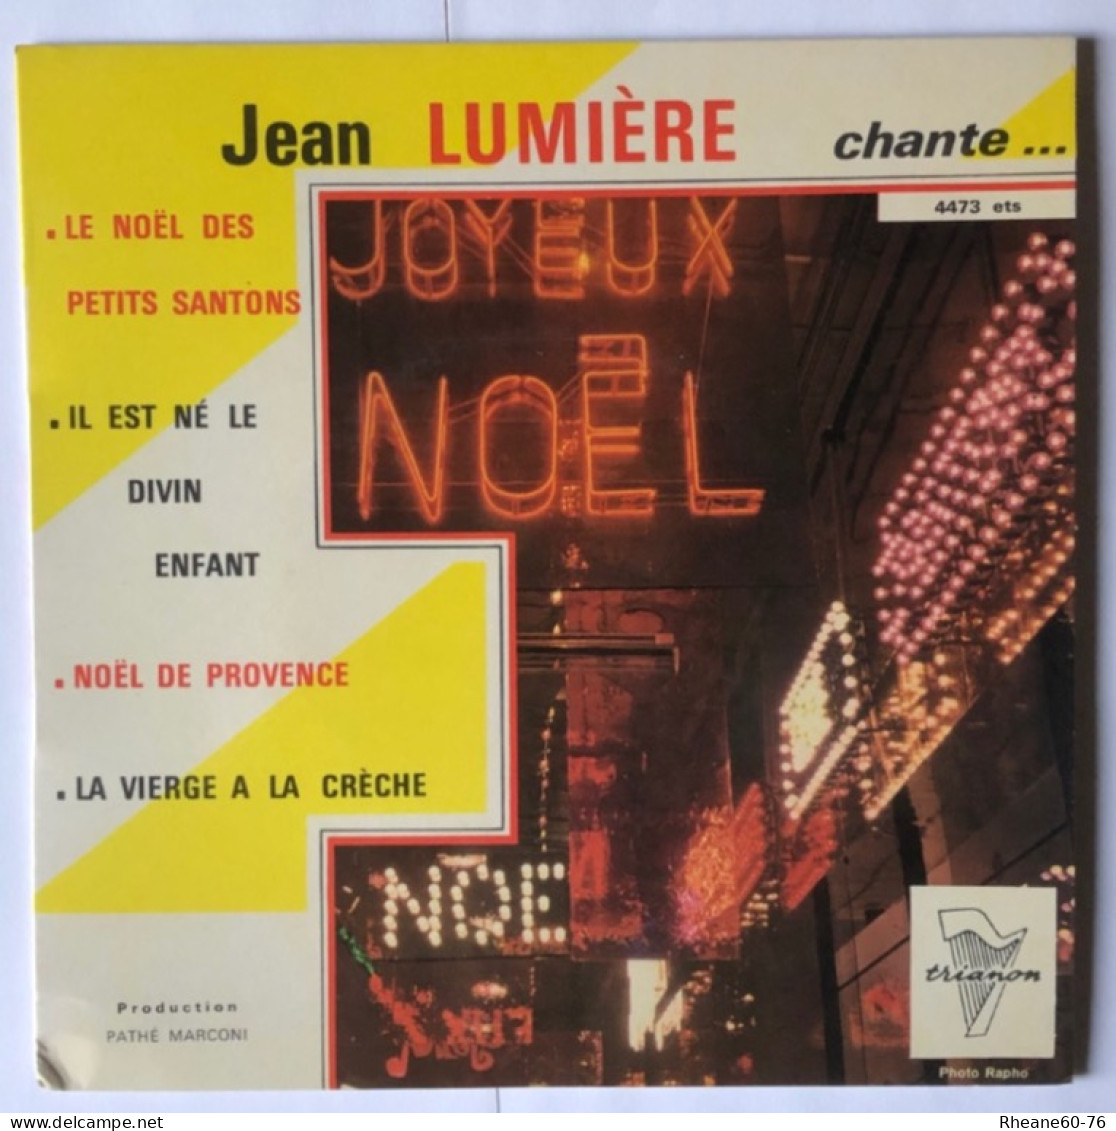 Trianon 4473 ETS - Jean Lumière Chante Noël … - Orchestre Direction Marcel Cariven - Pathé Marconi - Formati Speciali